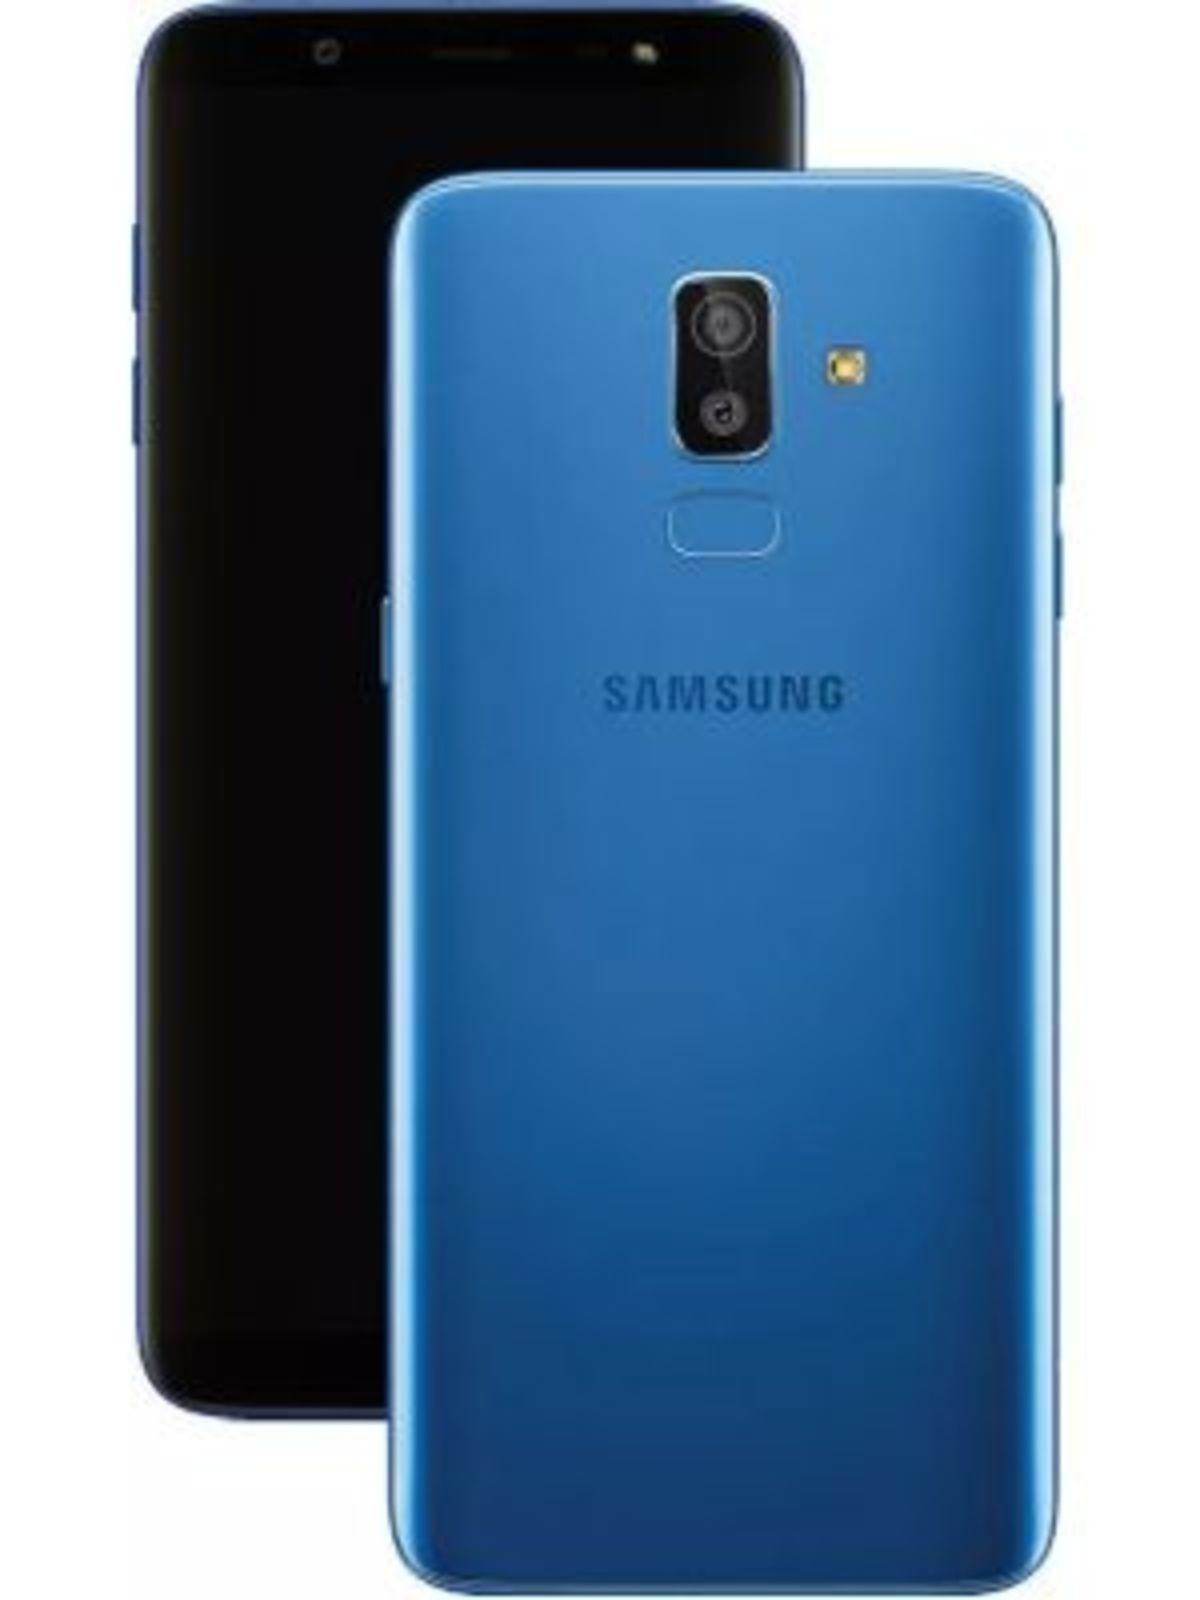 Самсунг джей 8. Samsung Galaxy j8. Samsung Galaxy j8 2018. Samsung j810f. Samsung SM-j810.